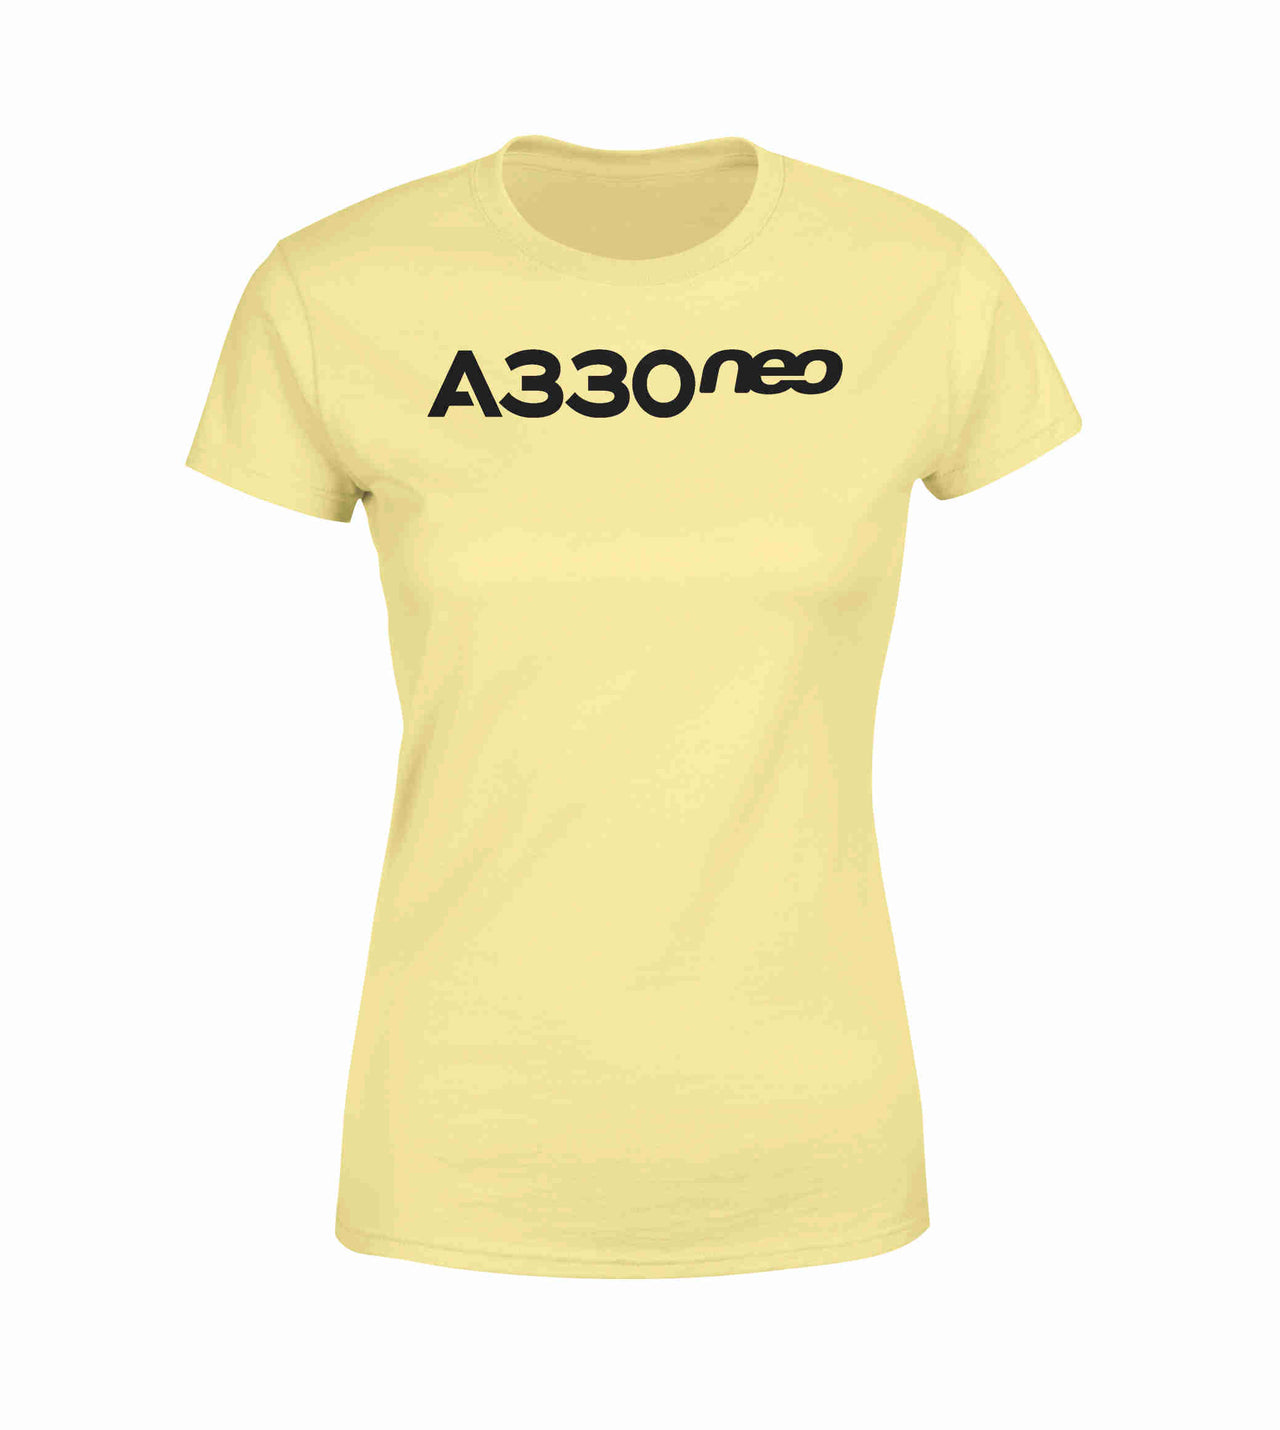 A330neo & Text Designed Women T-Shirts